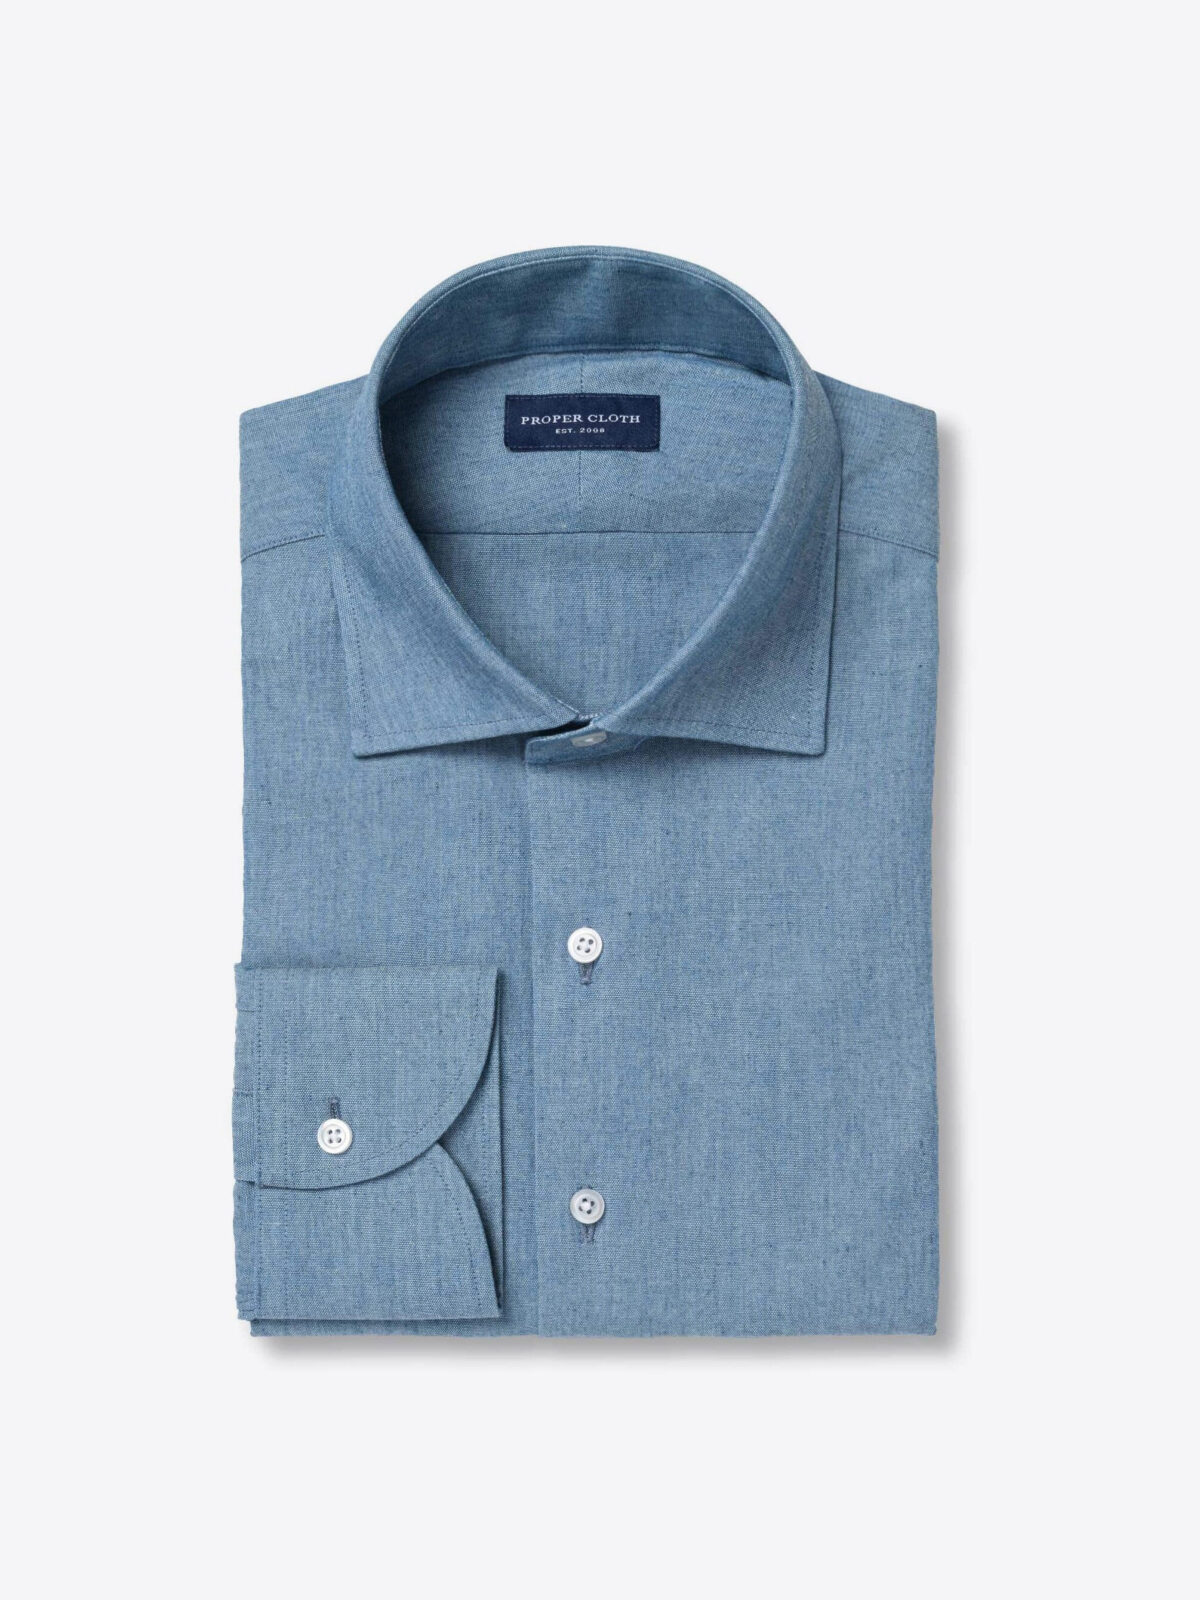 Blue Indigo Chambray Shirt by Proper Cloth